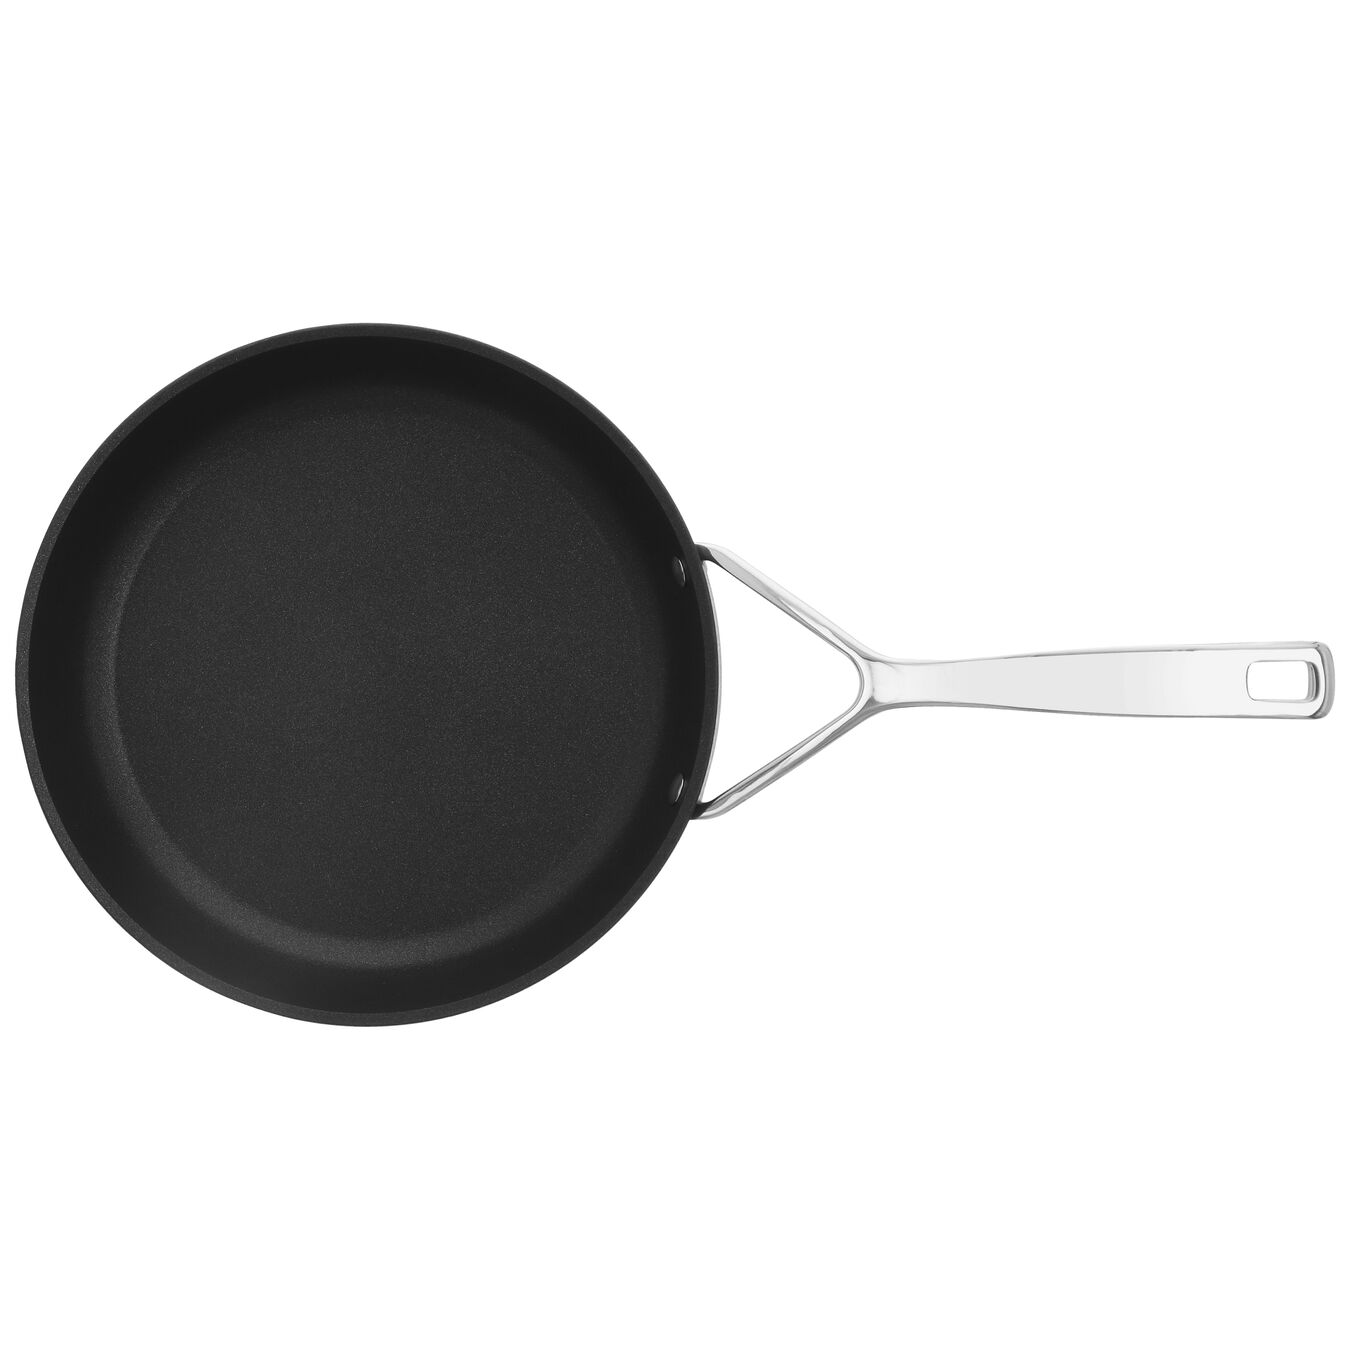 24 cm Aluminum Frying pan silver-black,,large 3